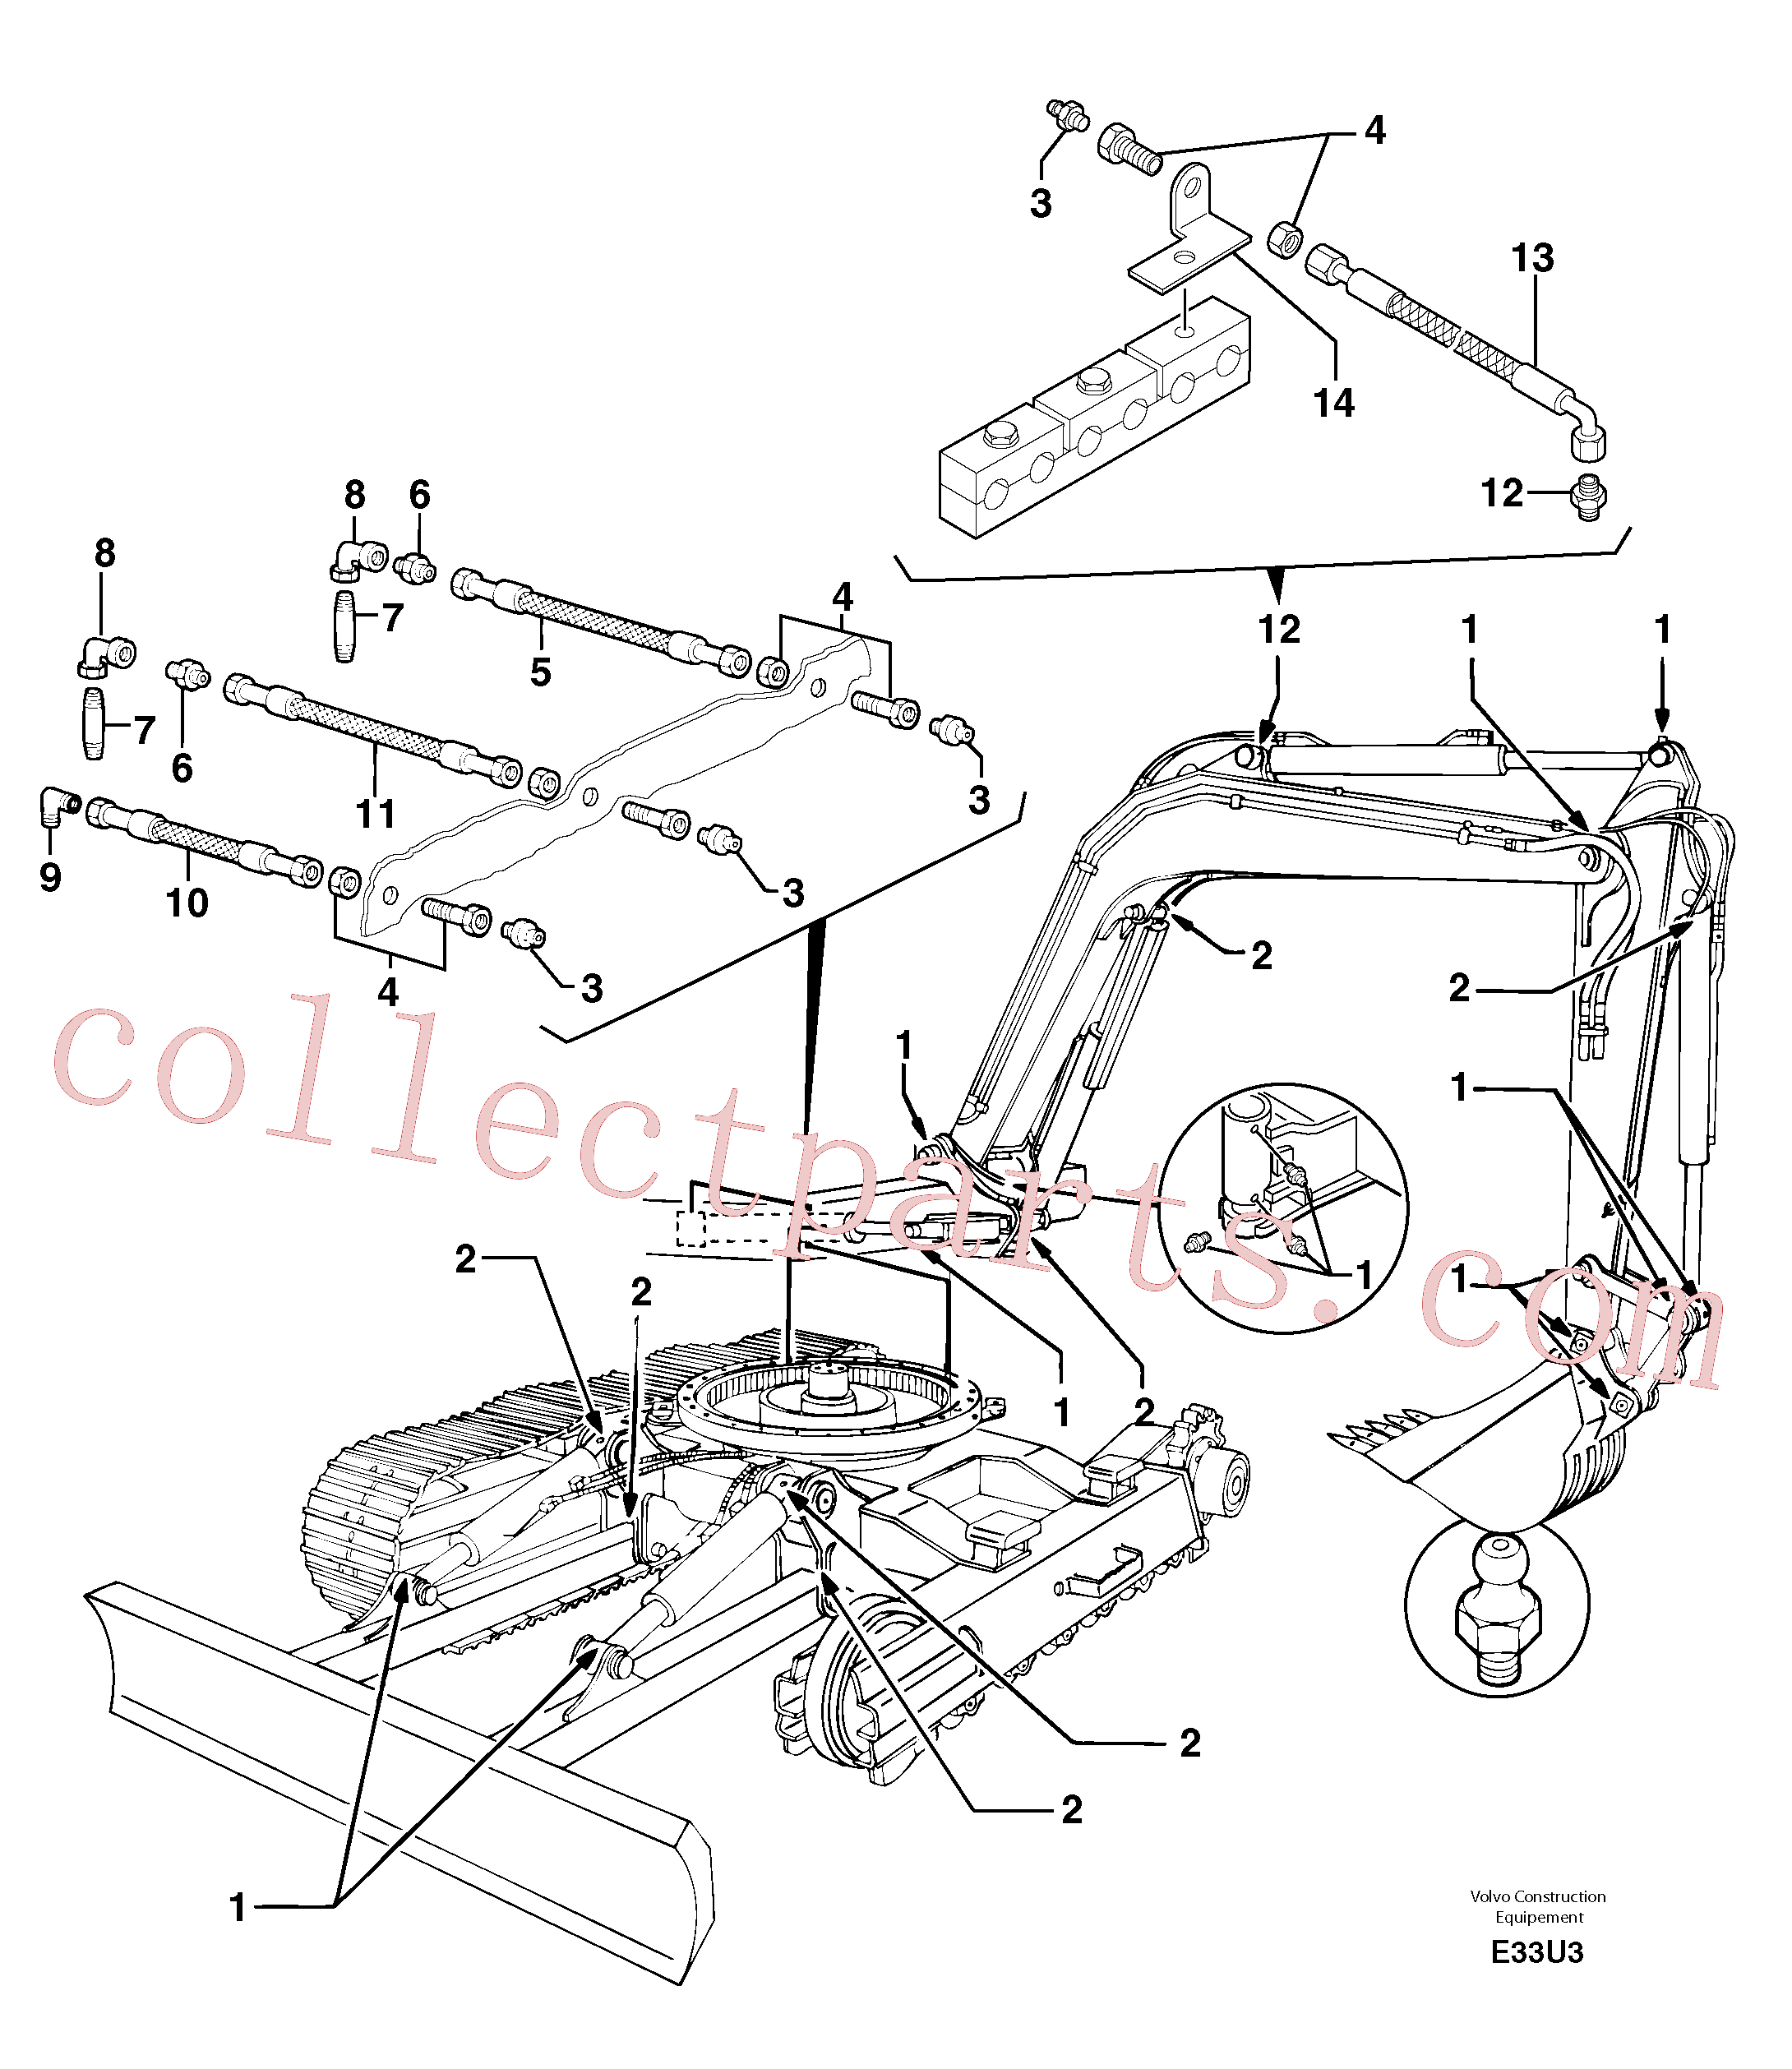 PJ7450194 for Volvo Lubrication chart(E33U3 assembly)